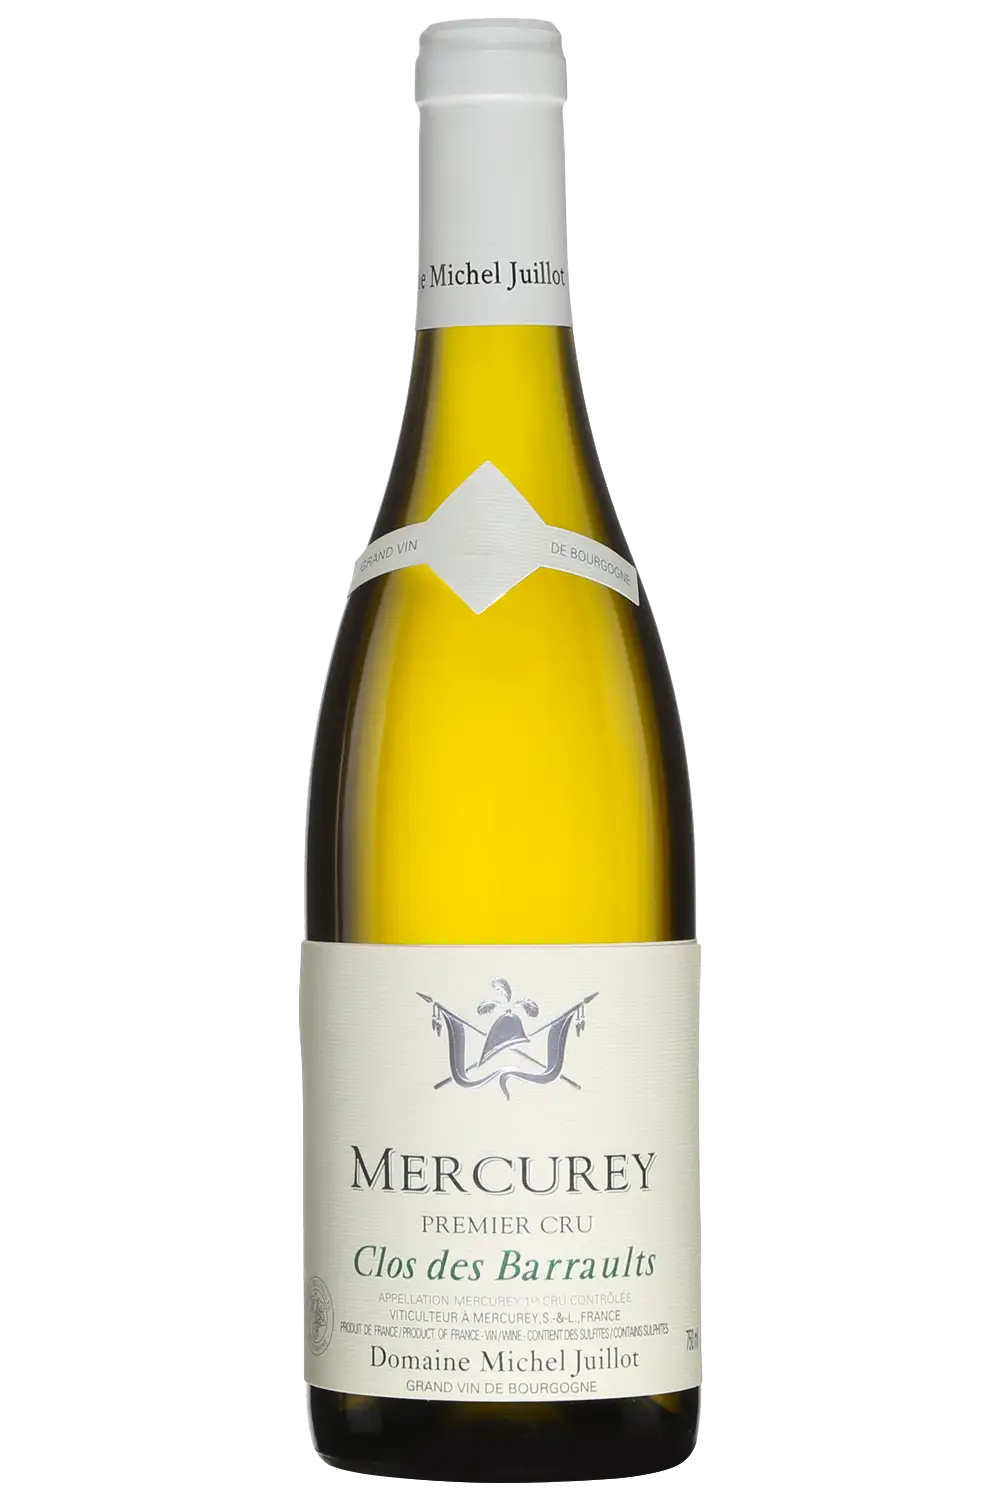 Bottle of Michel Juillot Mercurey Premier Cru Clos des Barraults Blanc from search results